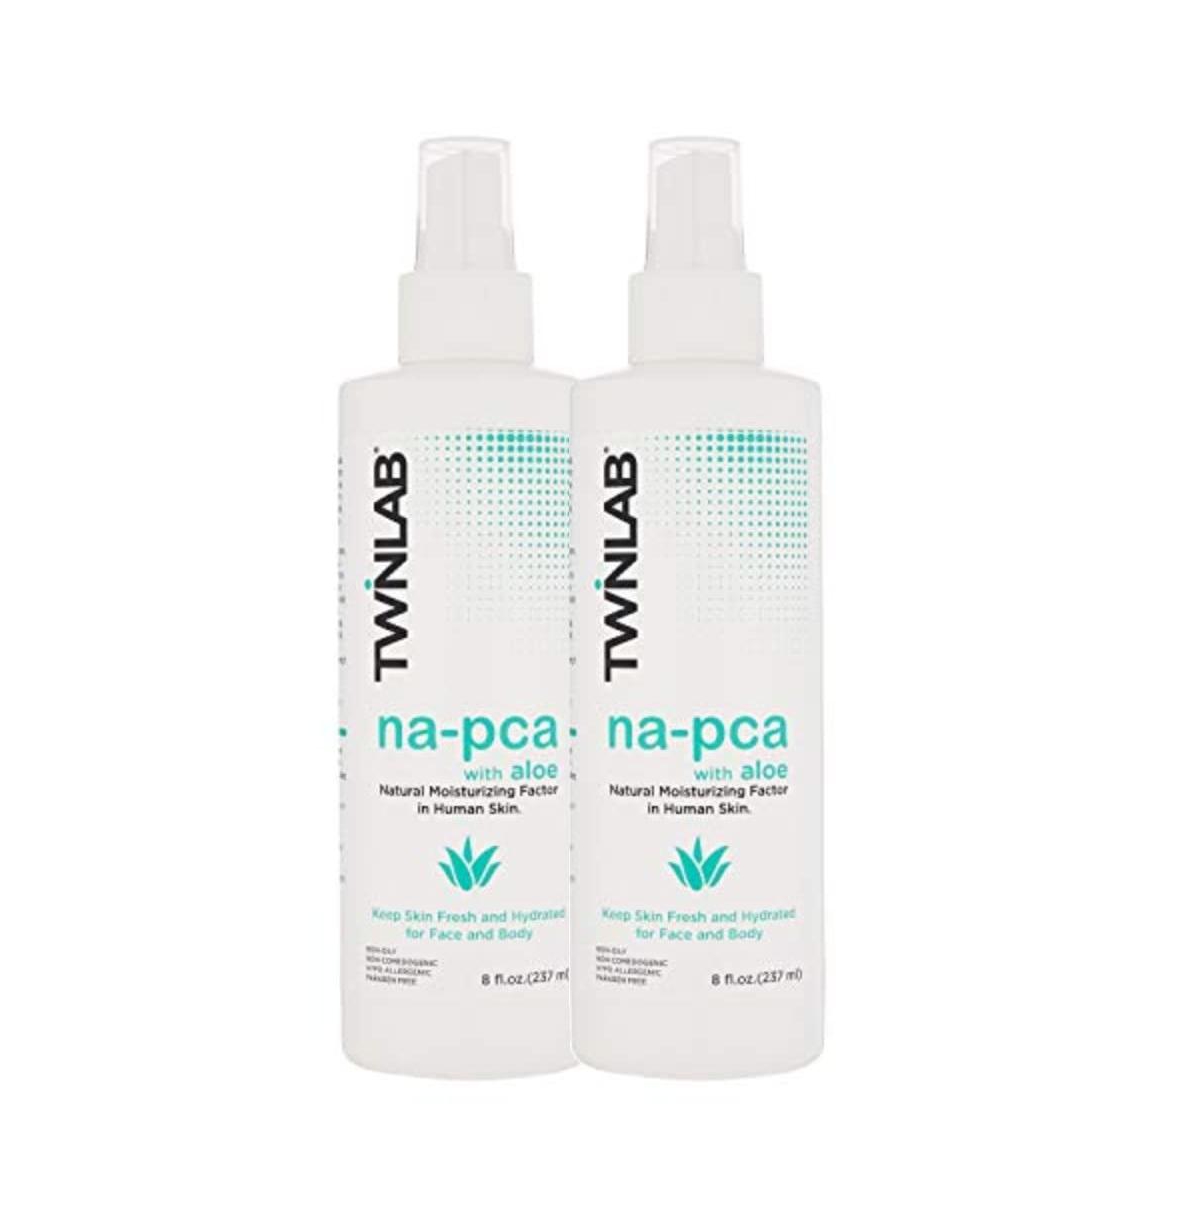 Na-pca Spray With Aloe Vera - Body Mist & Moisturizer for Dry Skin - 8 fl oz (Pack of 2) - White